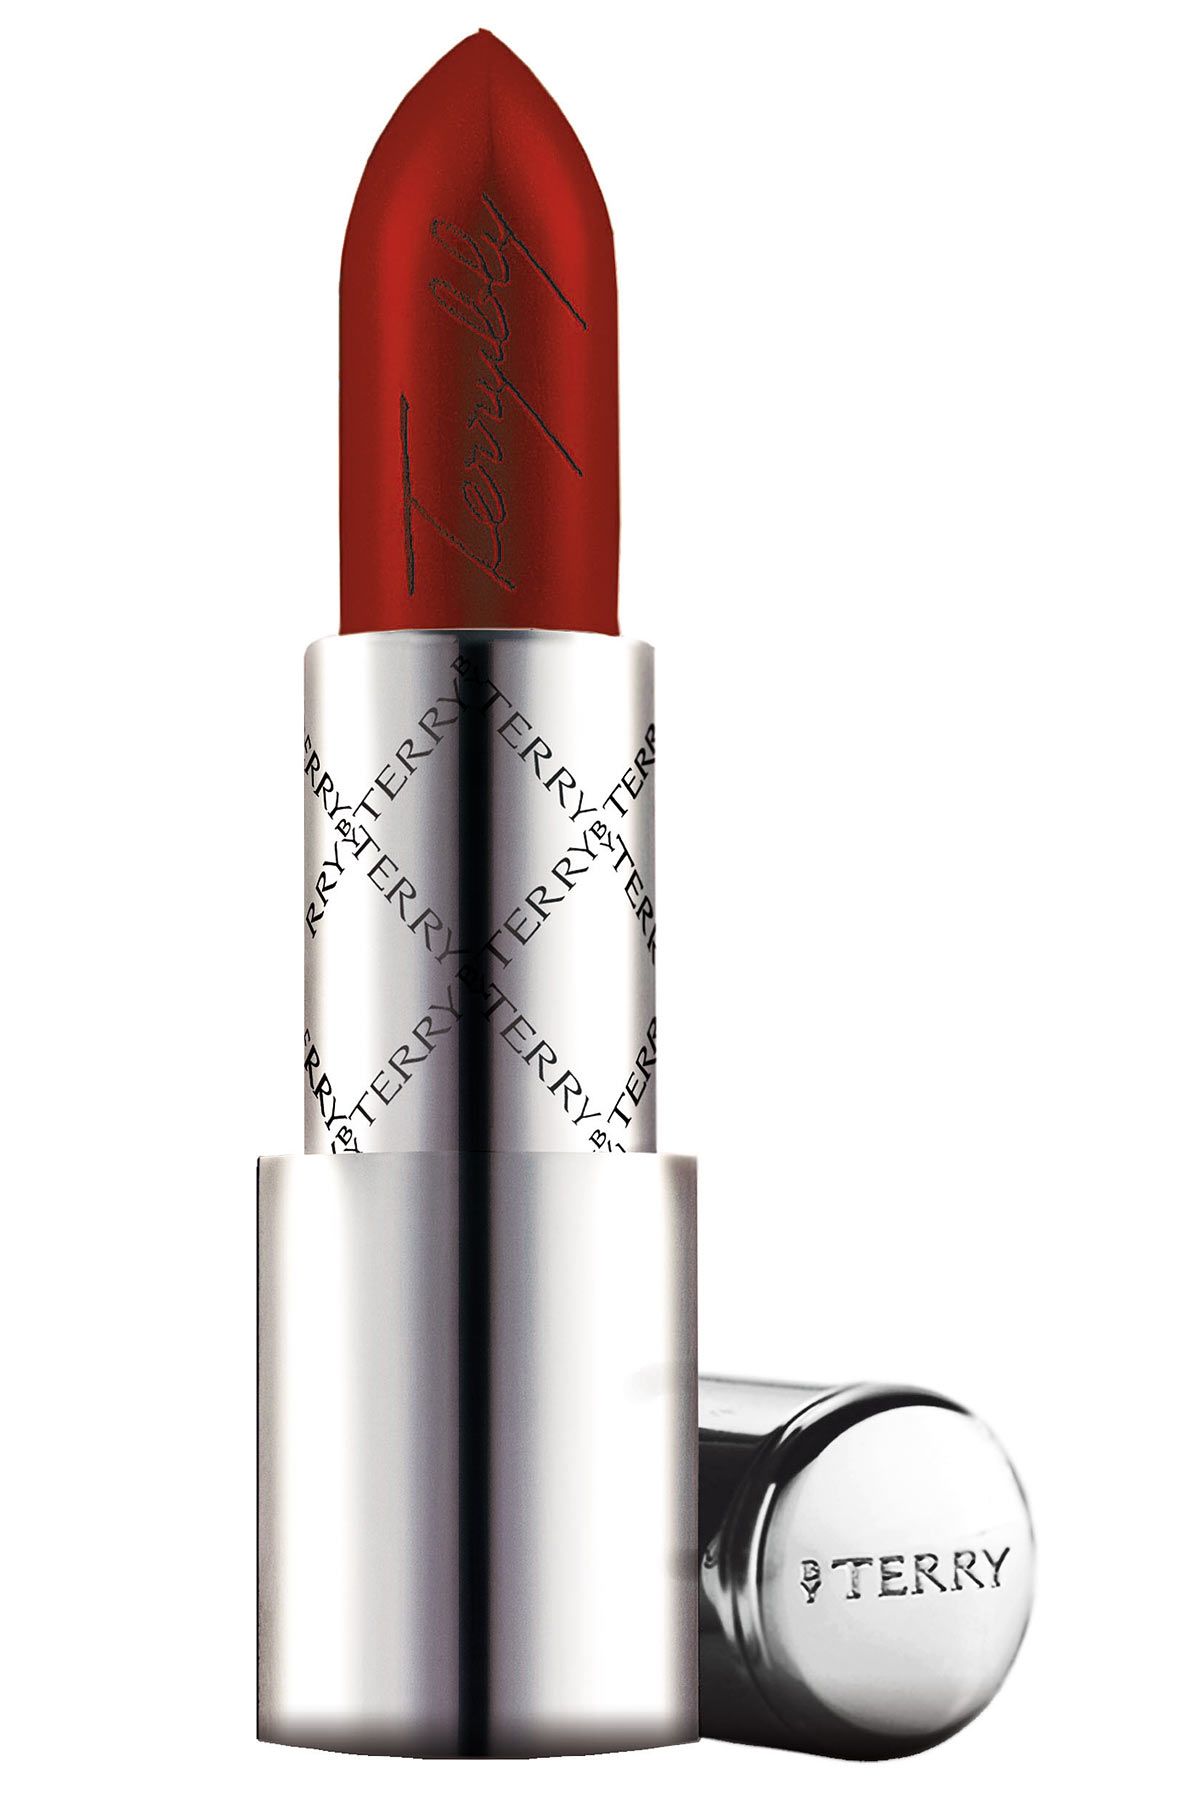 Testing the World's Most Luxurious Lipsticks